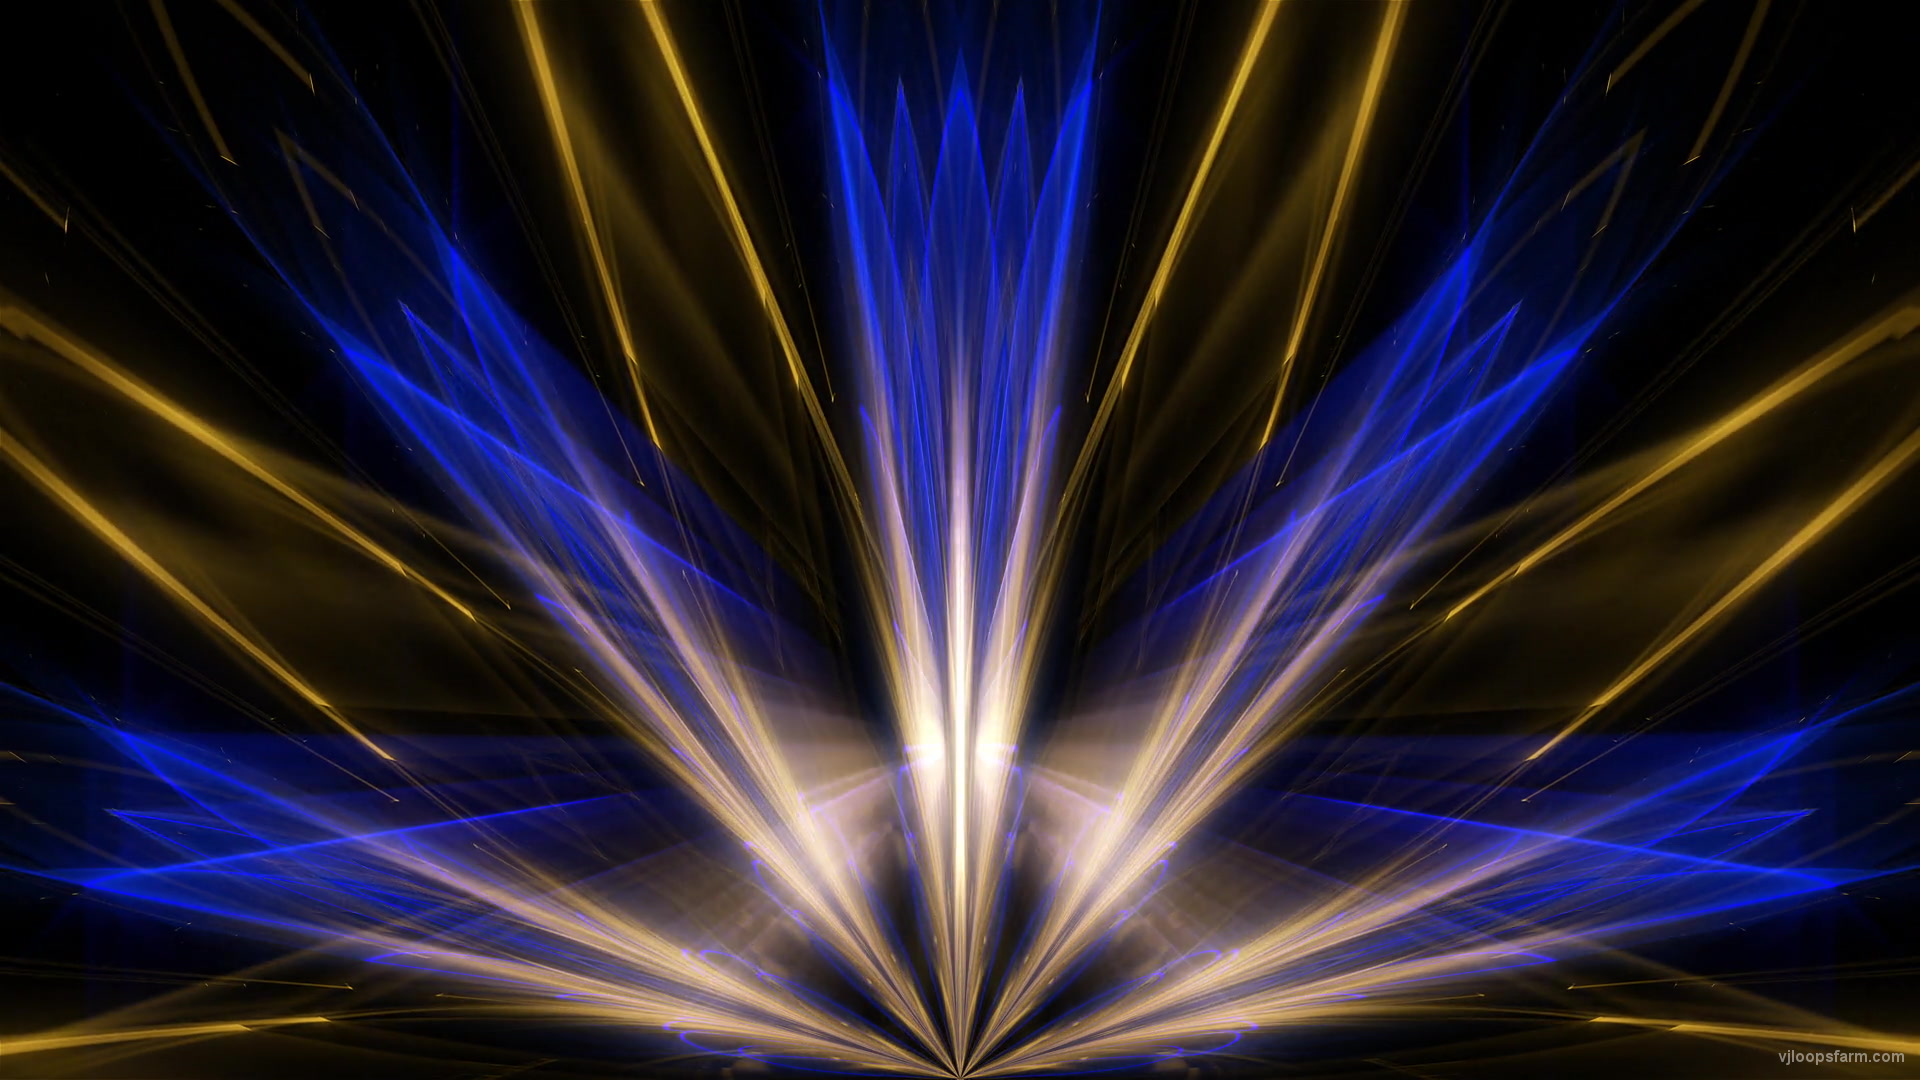 Abstract Sun Flower Flow in Blue-Golden Light Video Art UHD VJ Loop